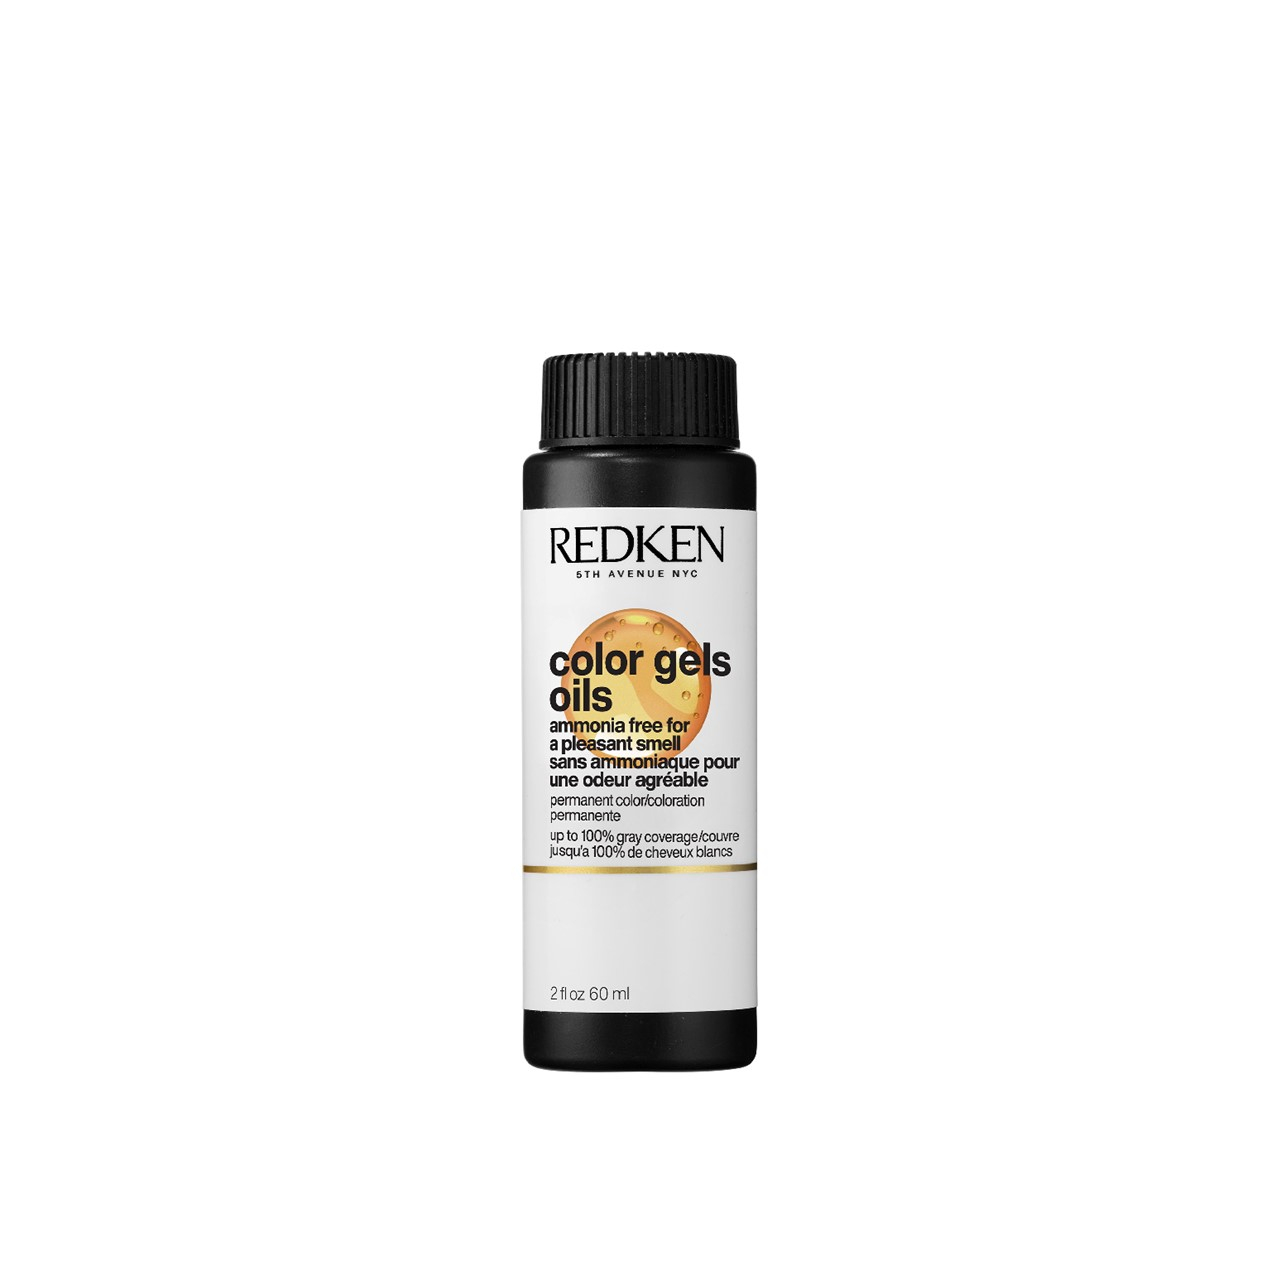 Redken Color Gels Oils 4NA Storm Cloud Permanent Hair Dye 60ml (2.03 fl oz)